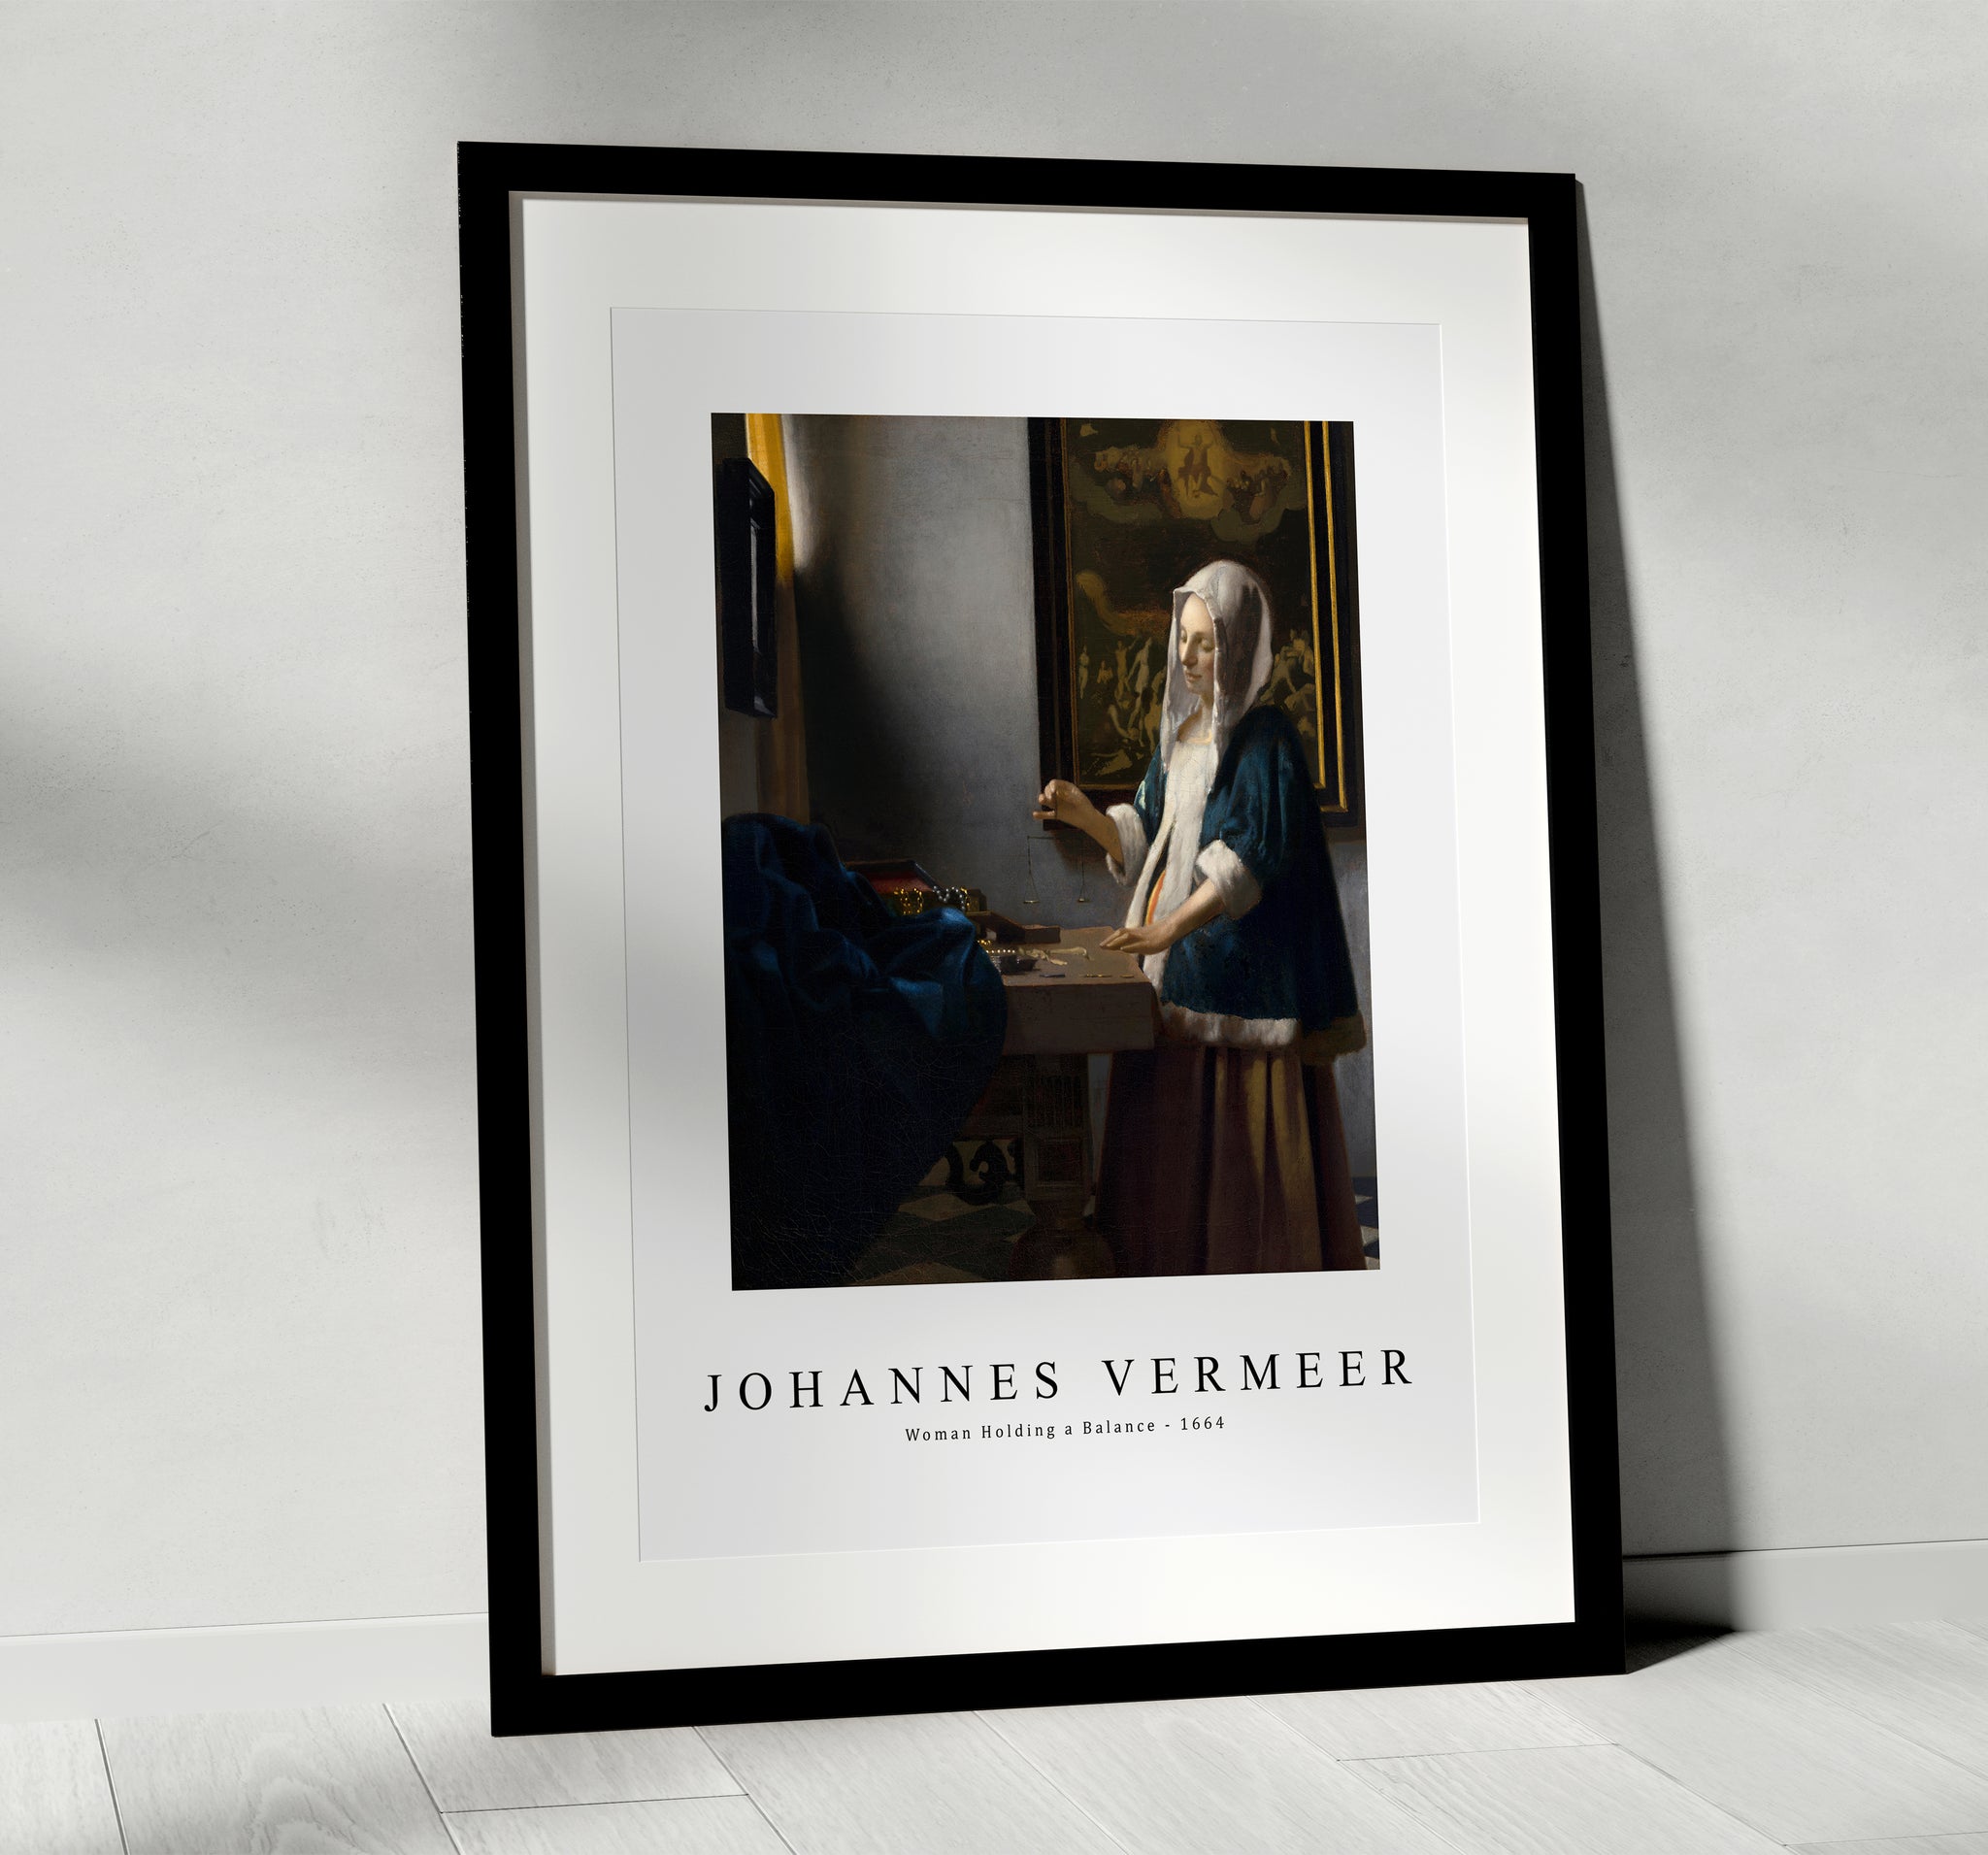 Johannes Vermeer - Woman Holding a Balance 1664